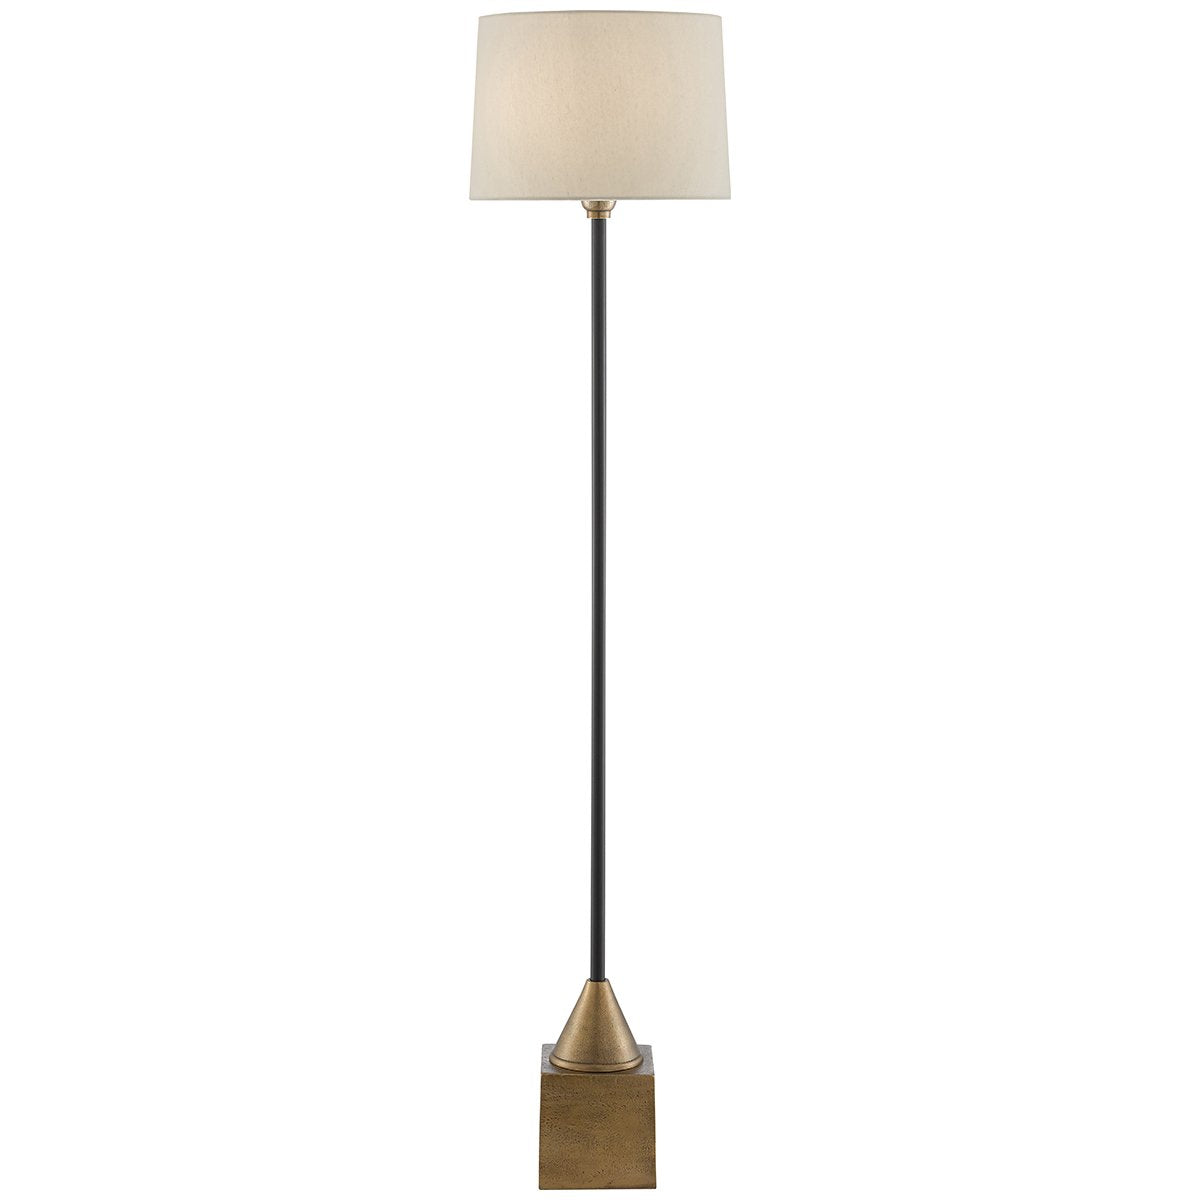 Currey and Company Keeler Floor Lamp